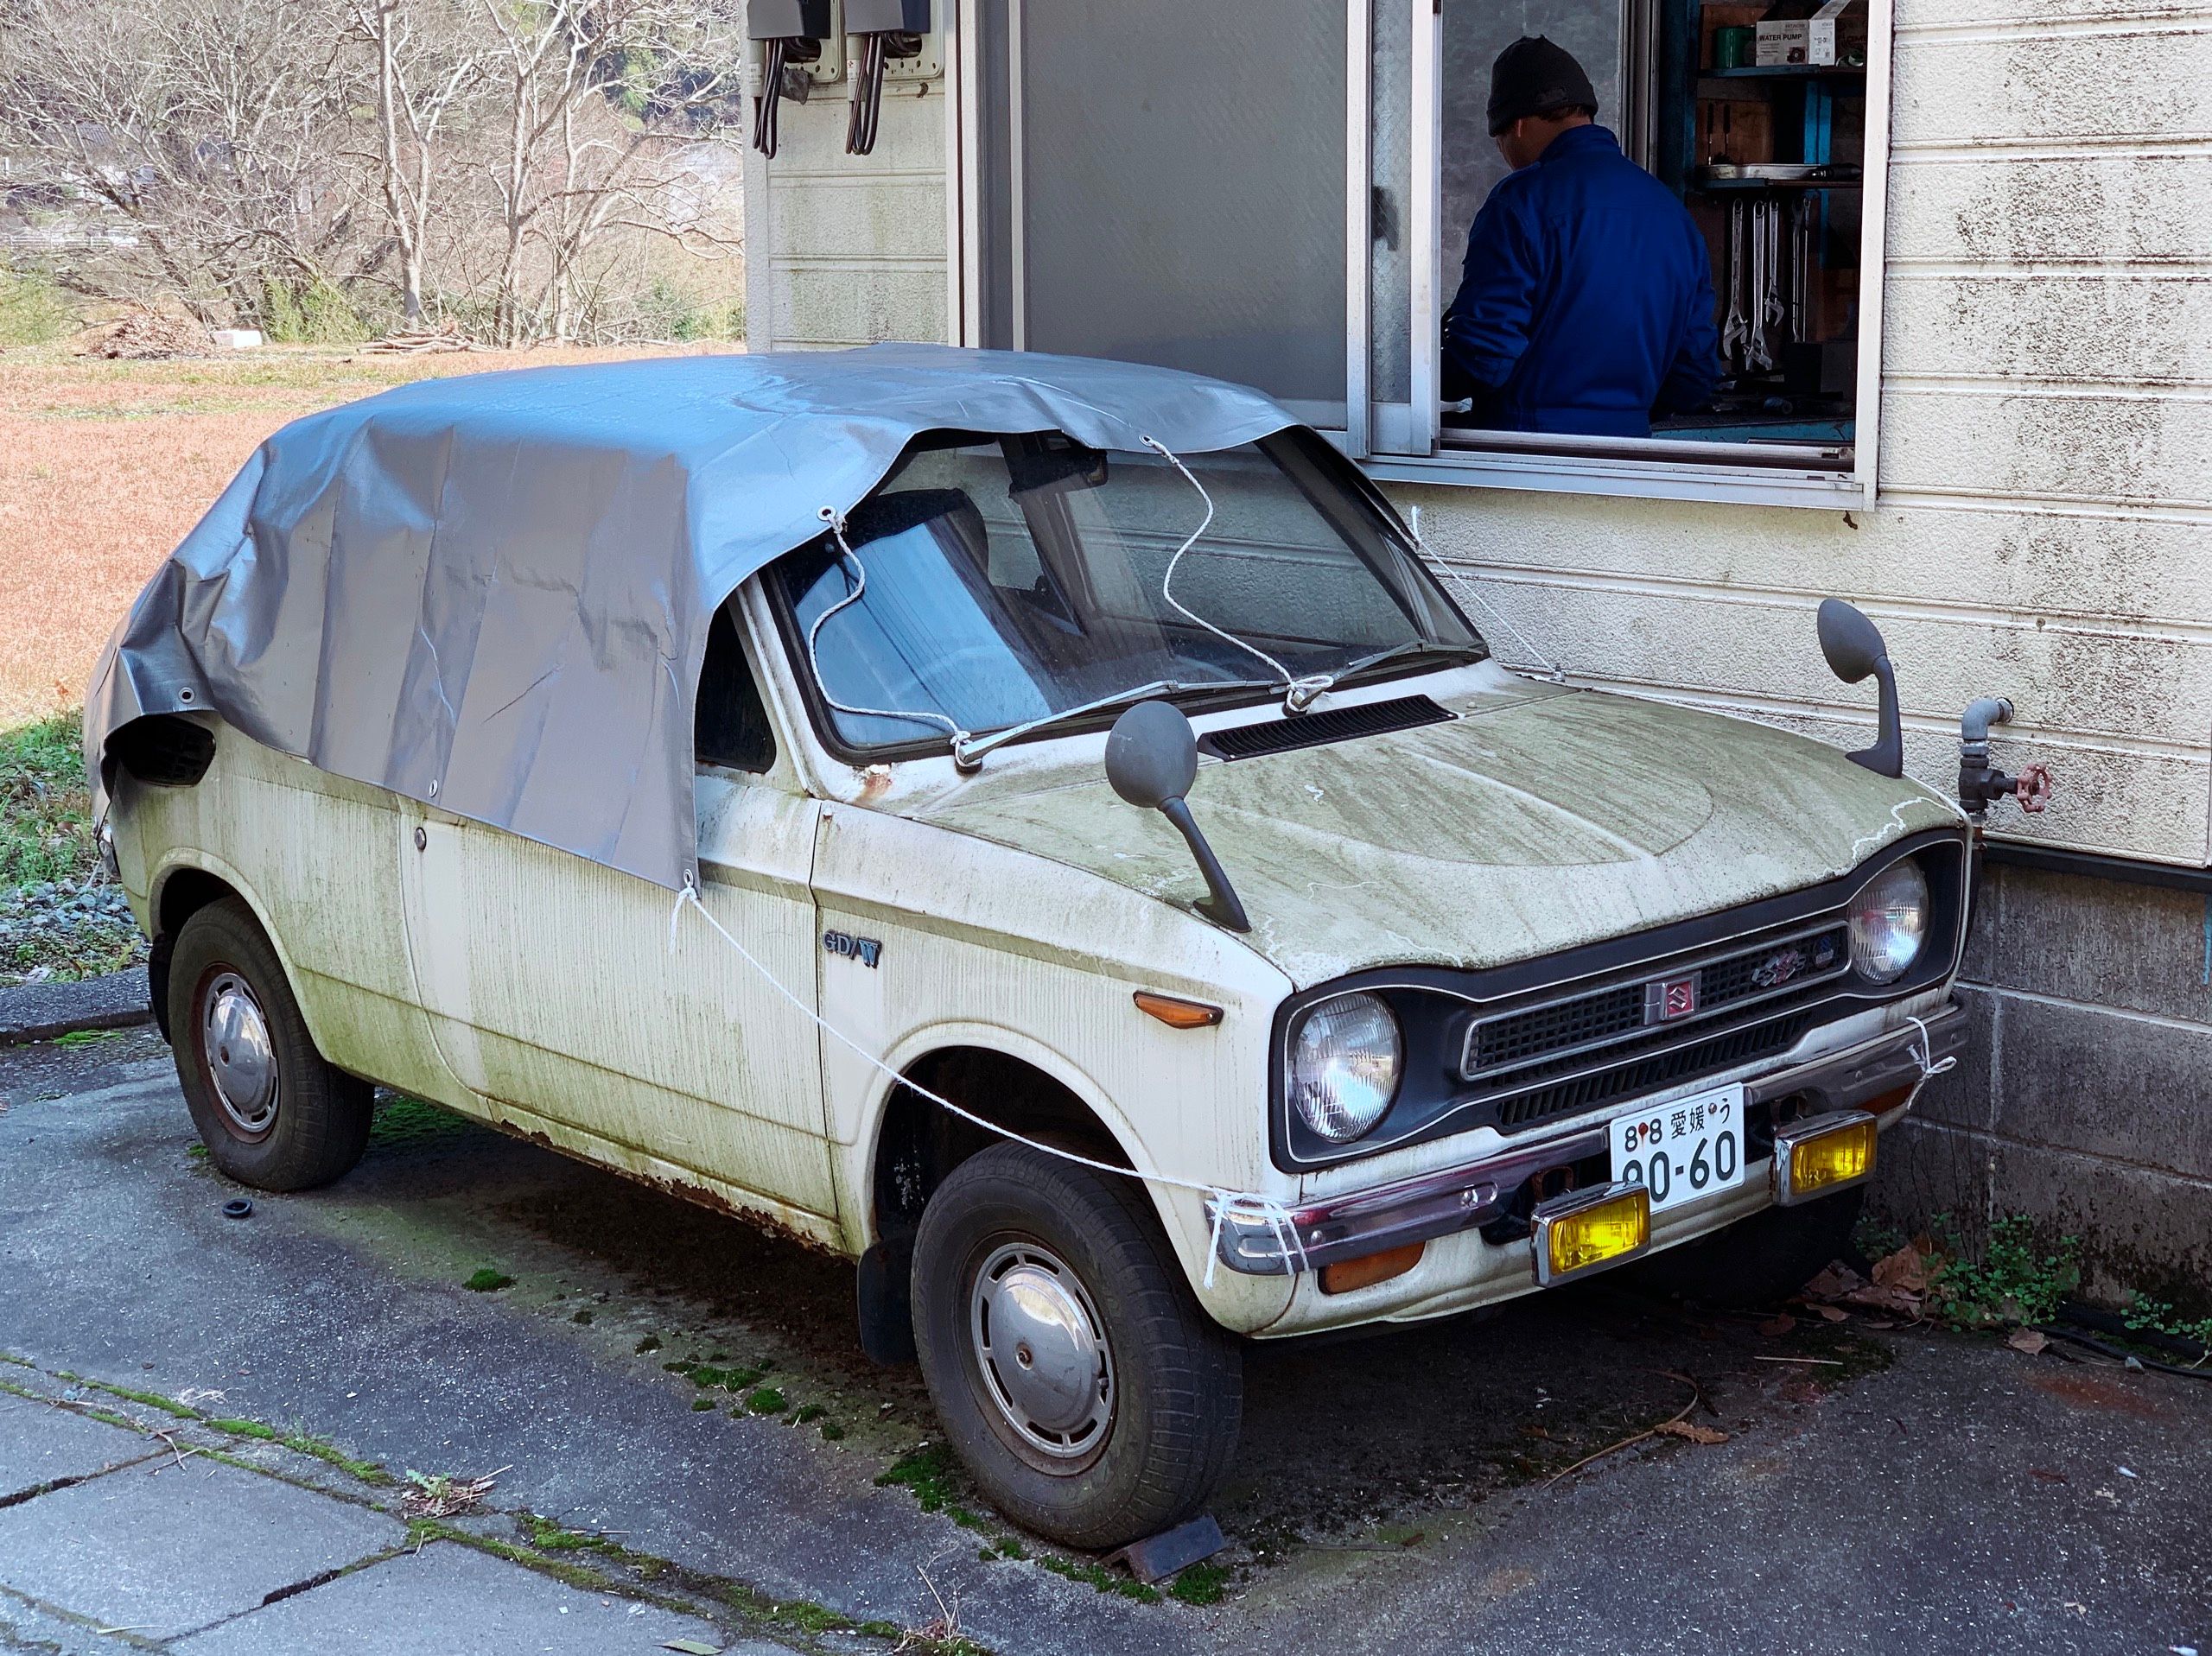 An even smaller Suzuki hatchback, covered with a tarp.